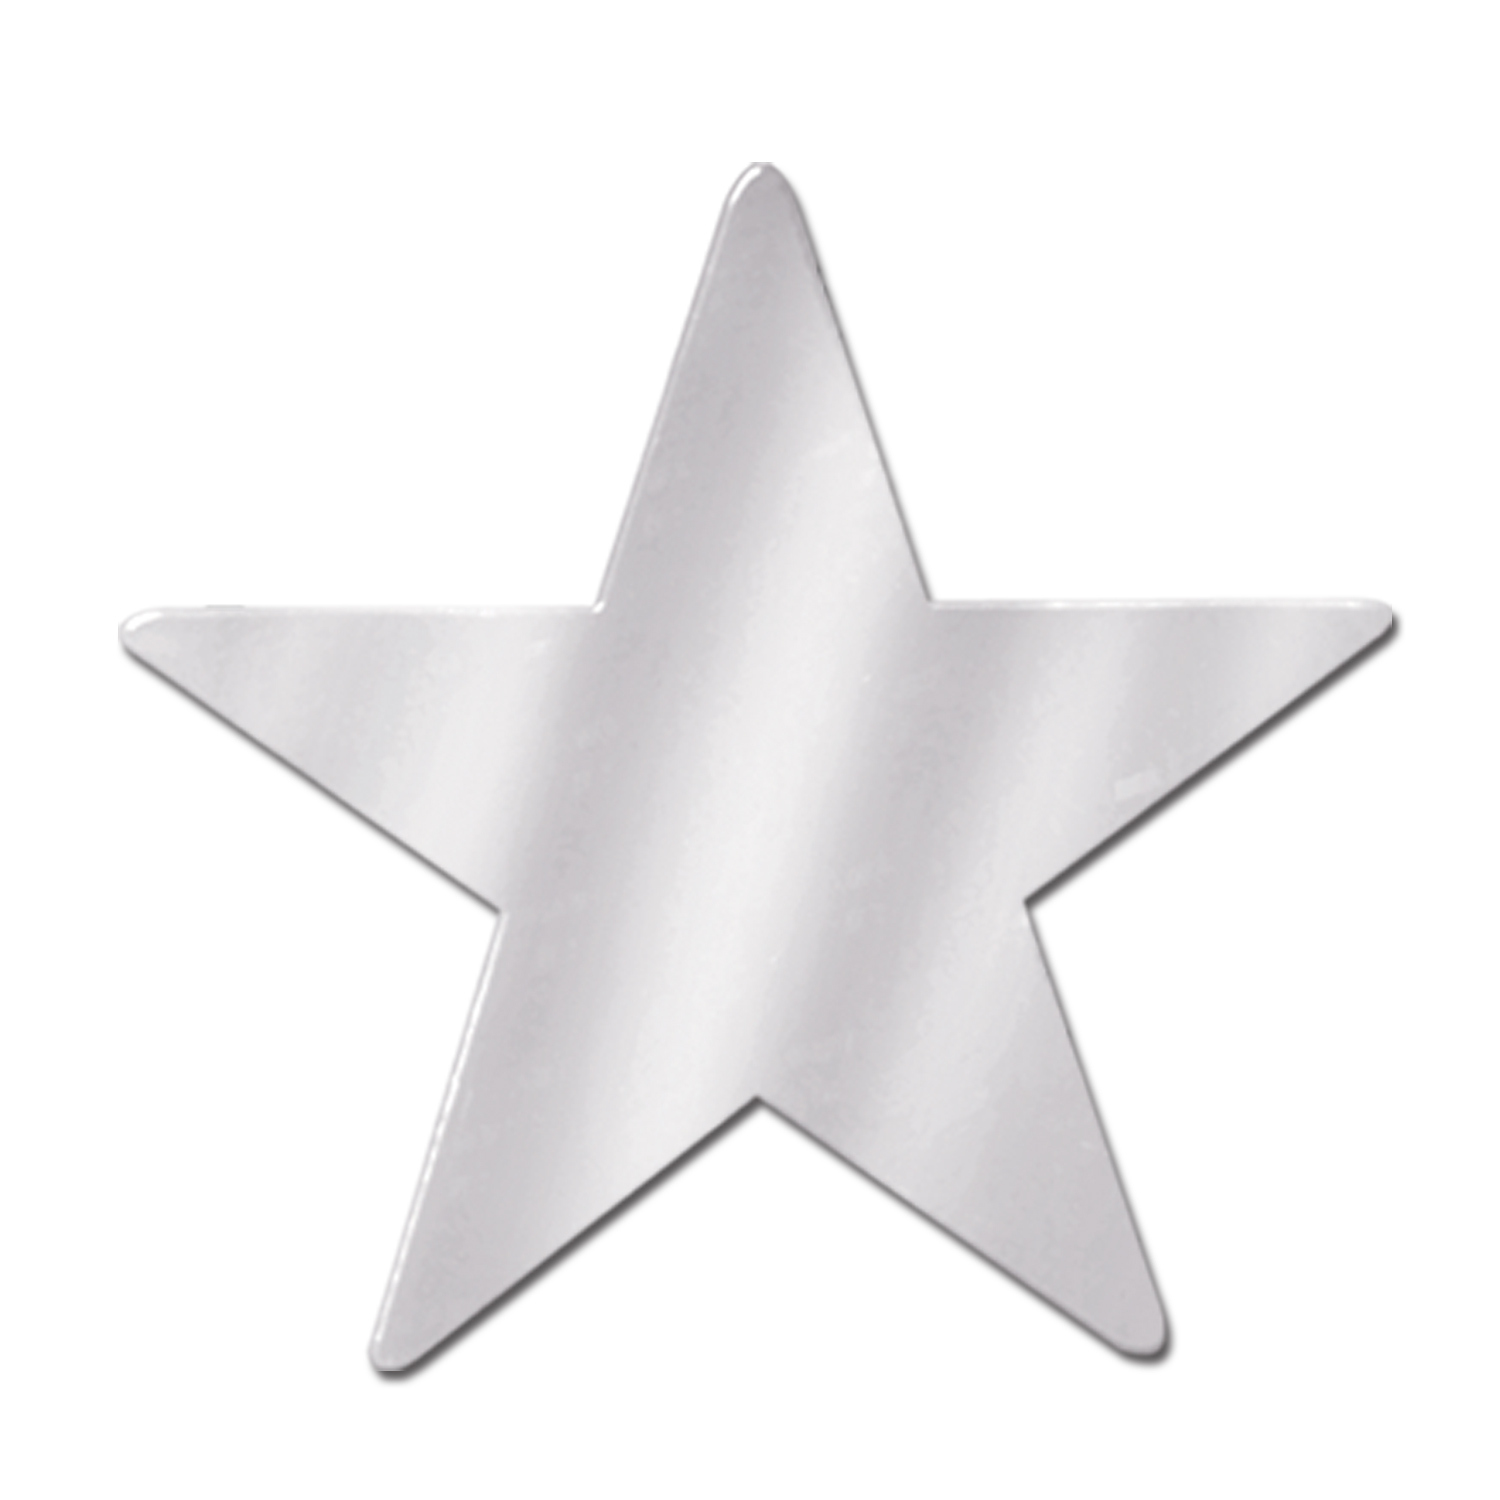 Silver card stock star cutout decoration.